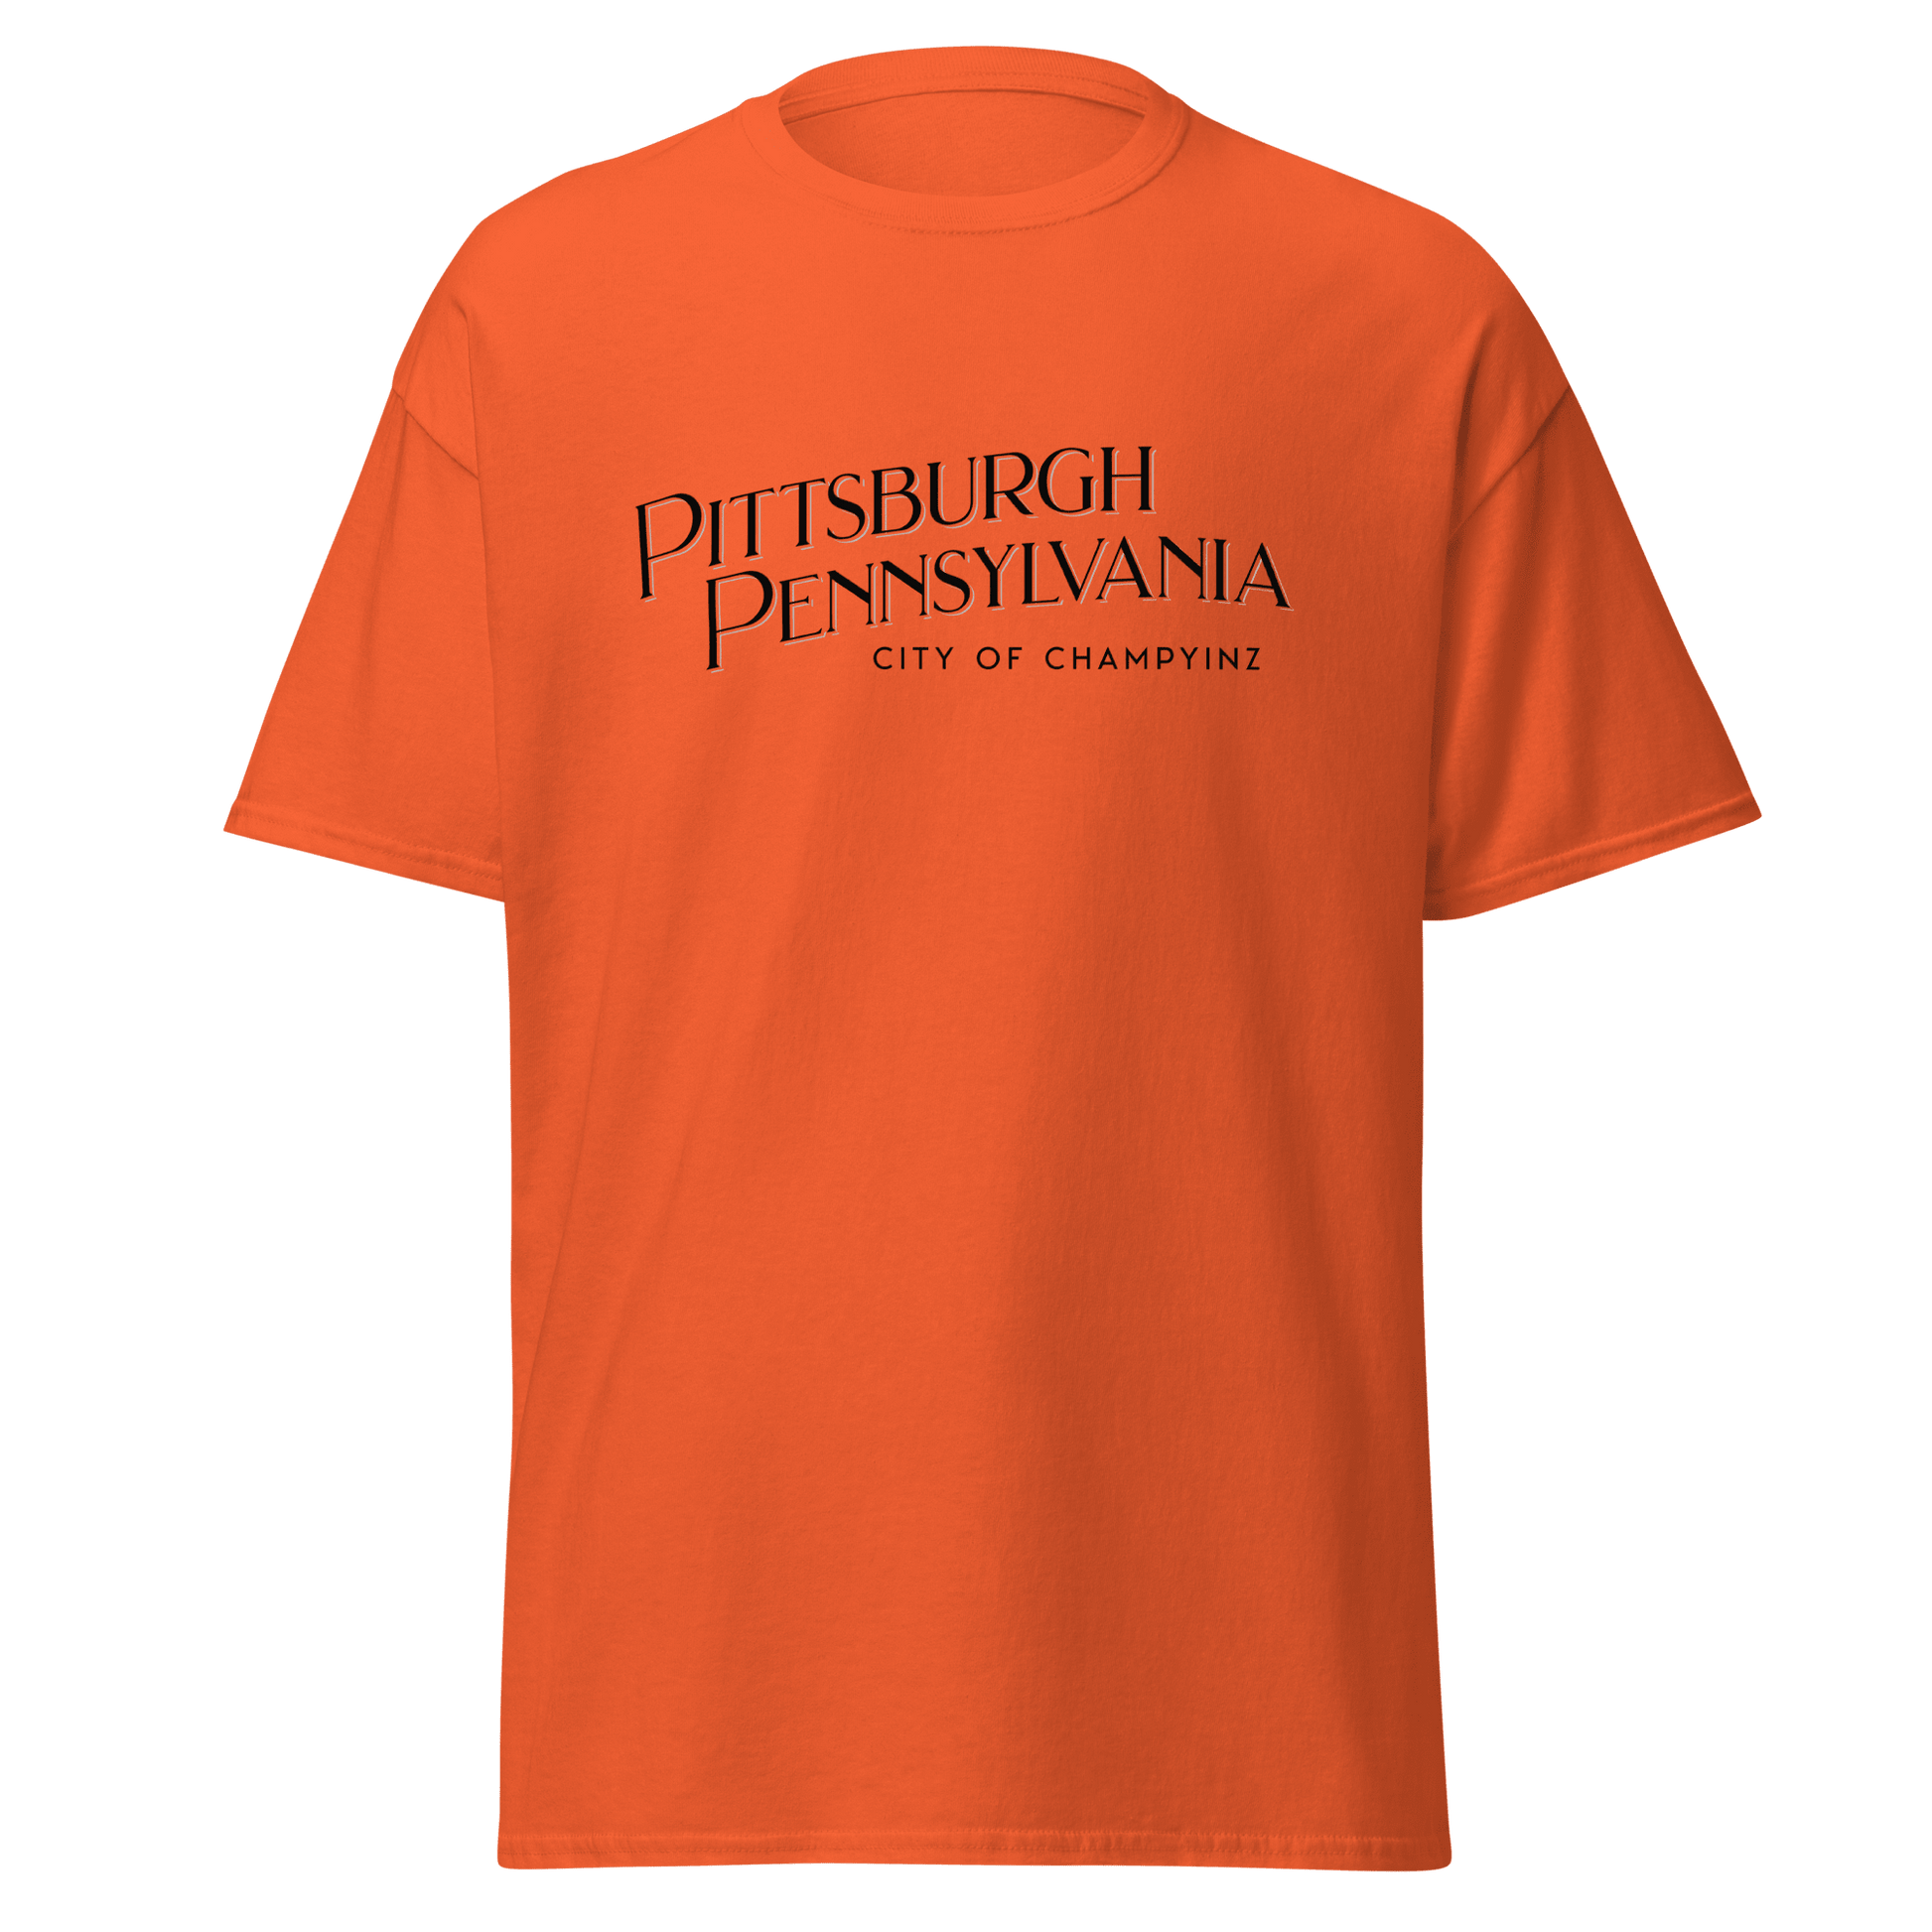 Pittsburgh Pa City of ChampYINZ T-Shirt Yinzergear Orange S 